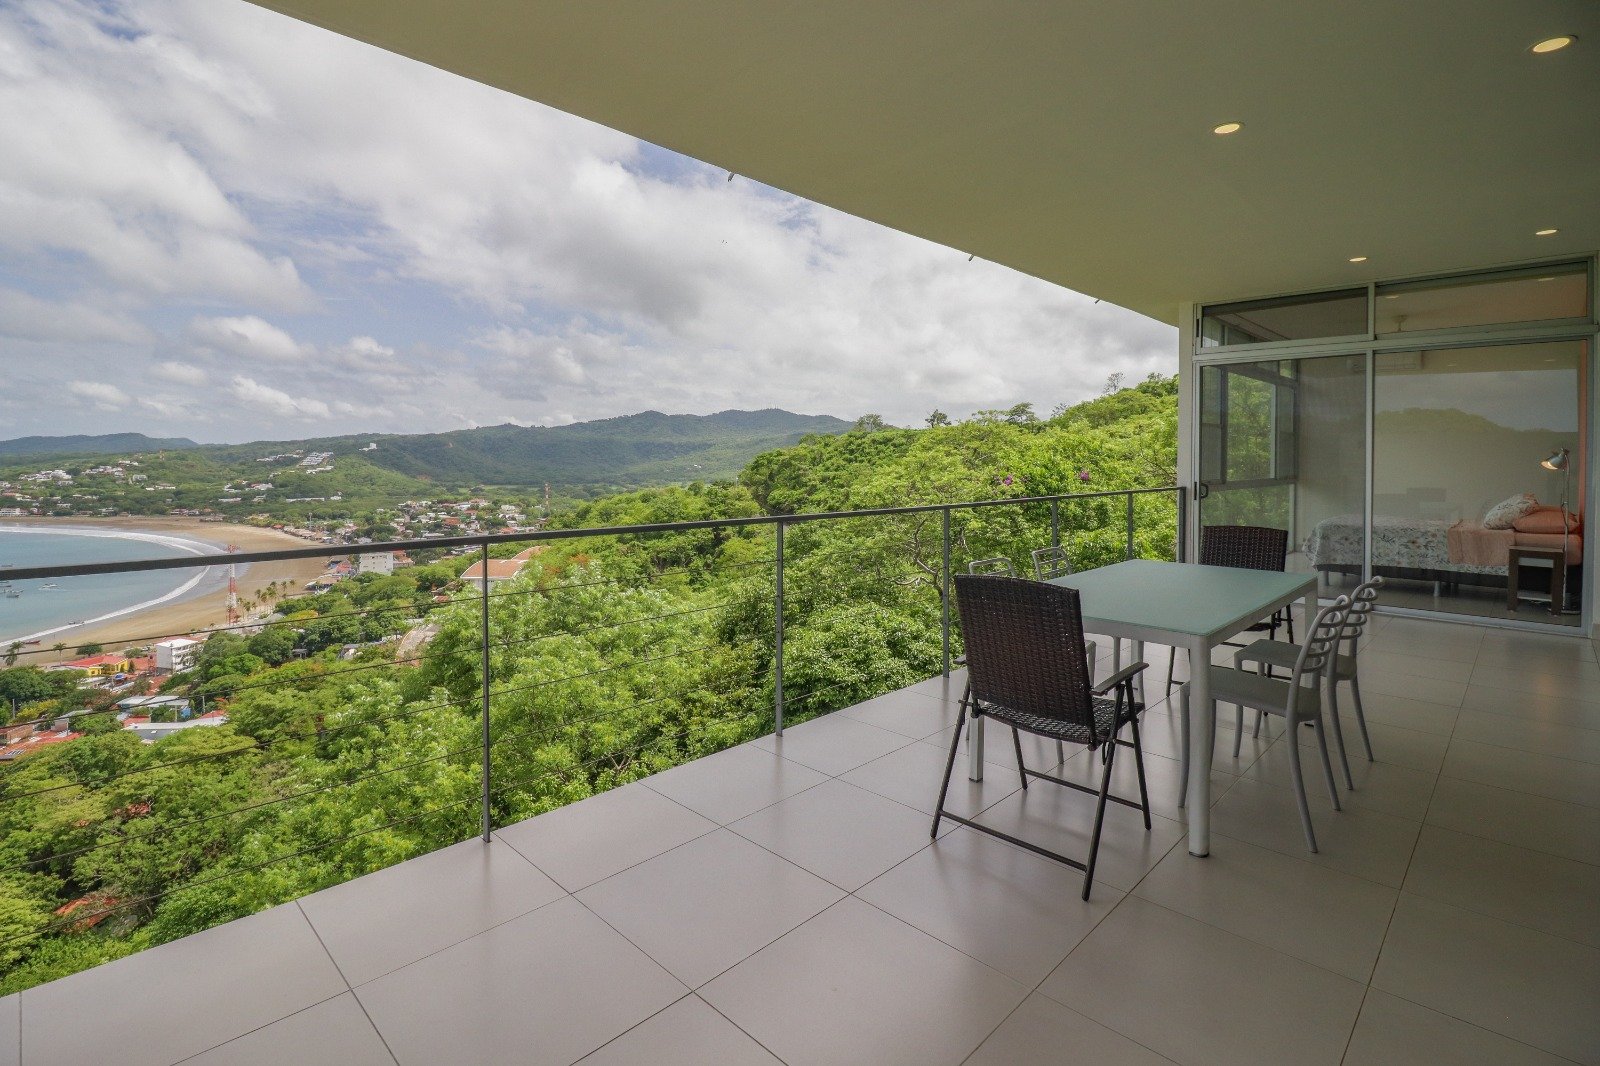 Two bedroom ocean view home for sale property real estate San Juan Del Sur (8).jpeg